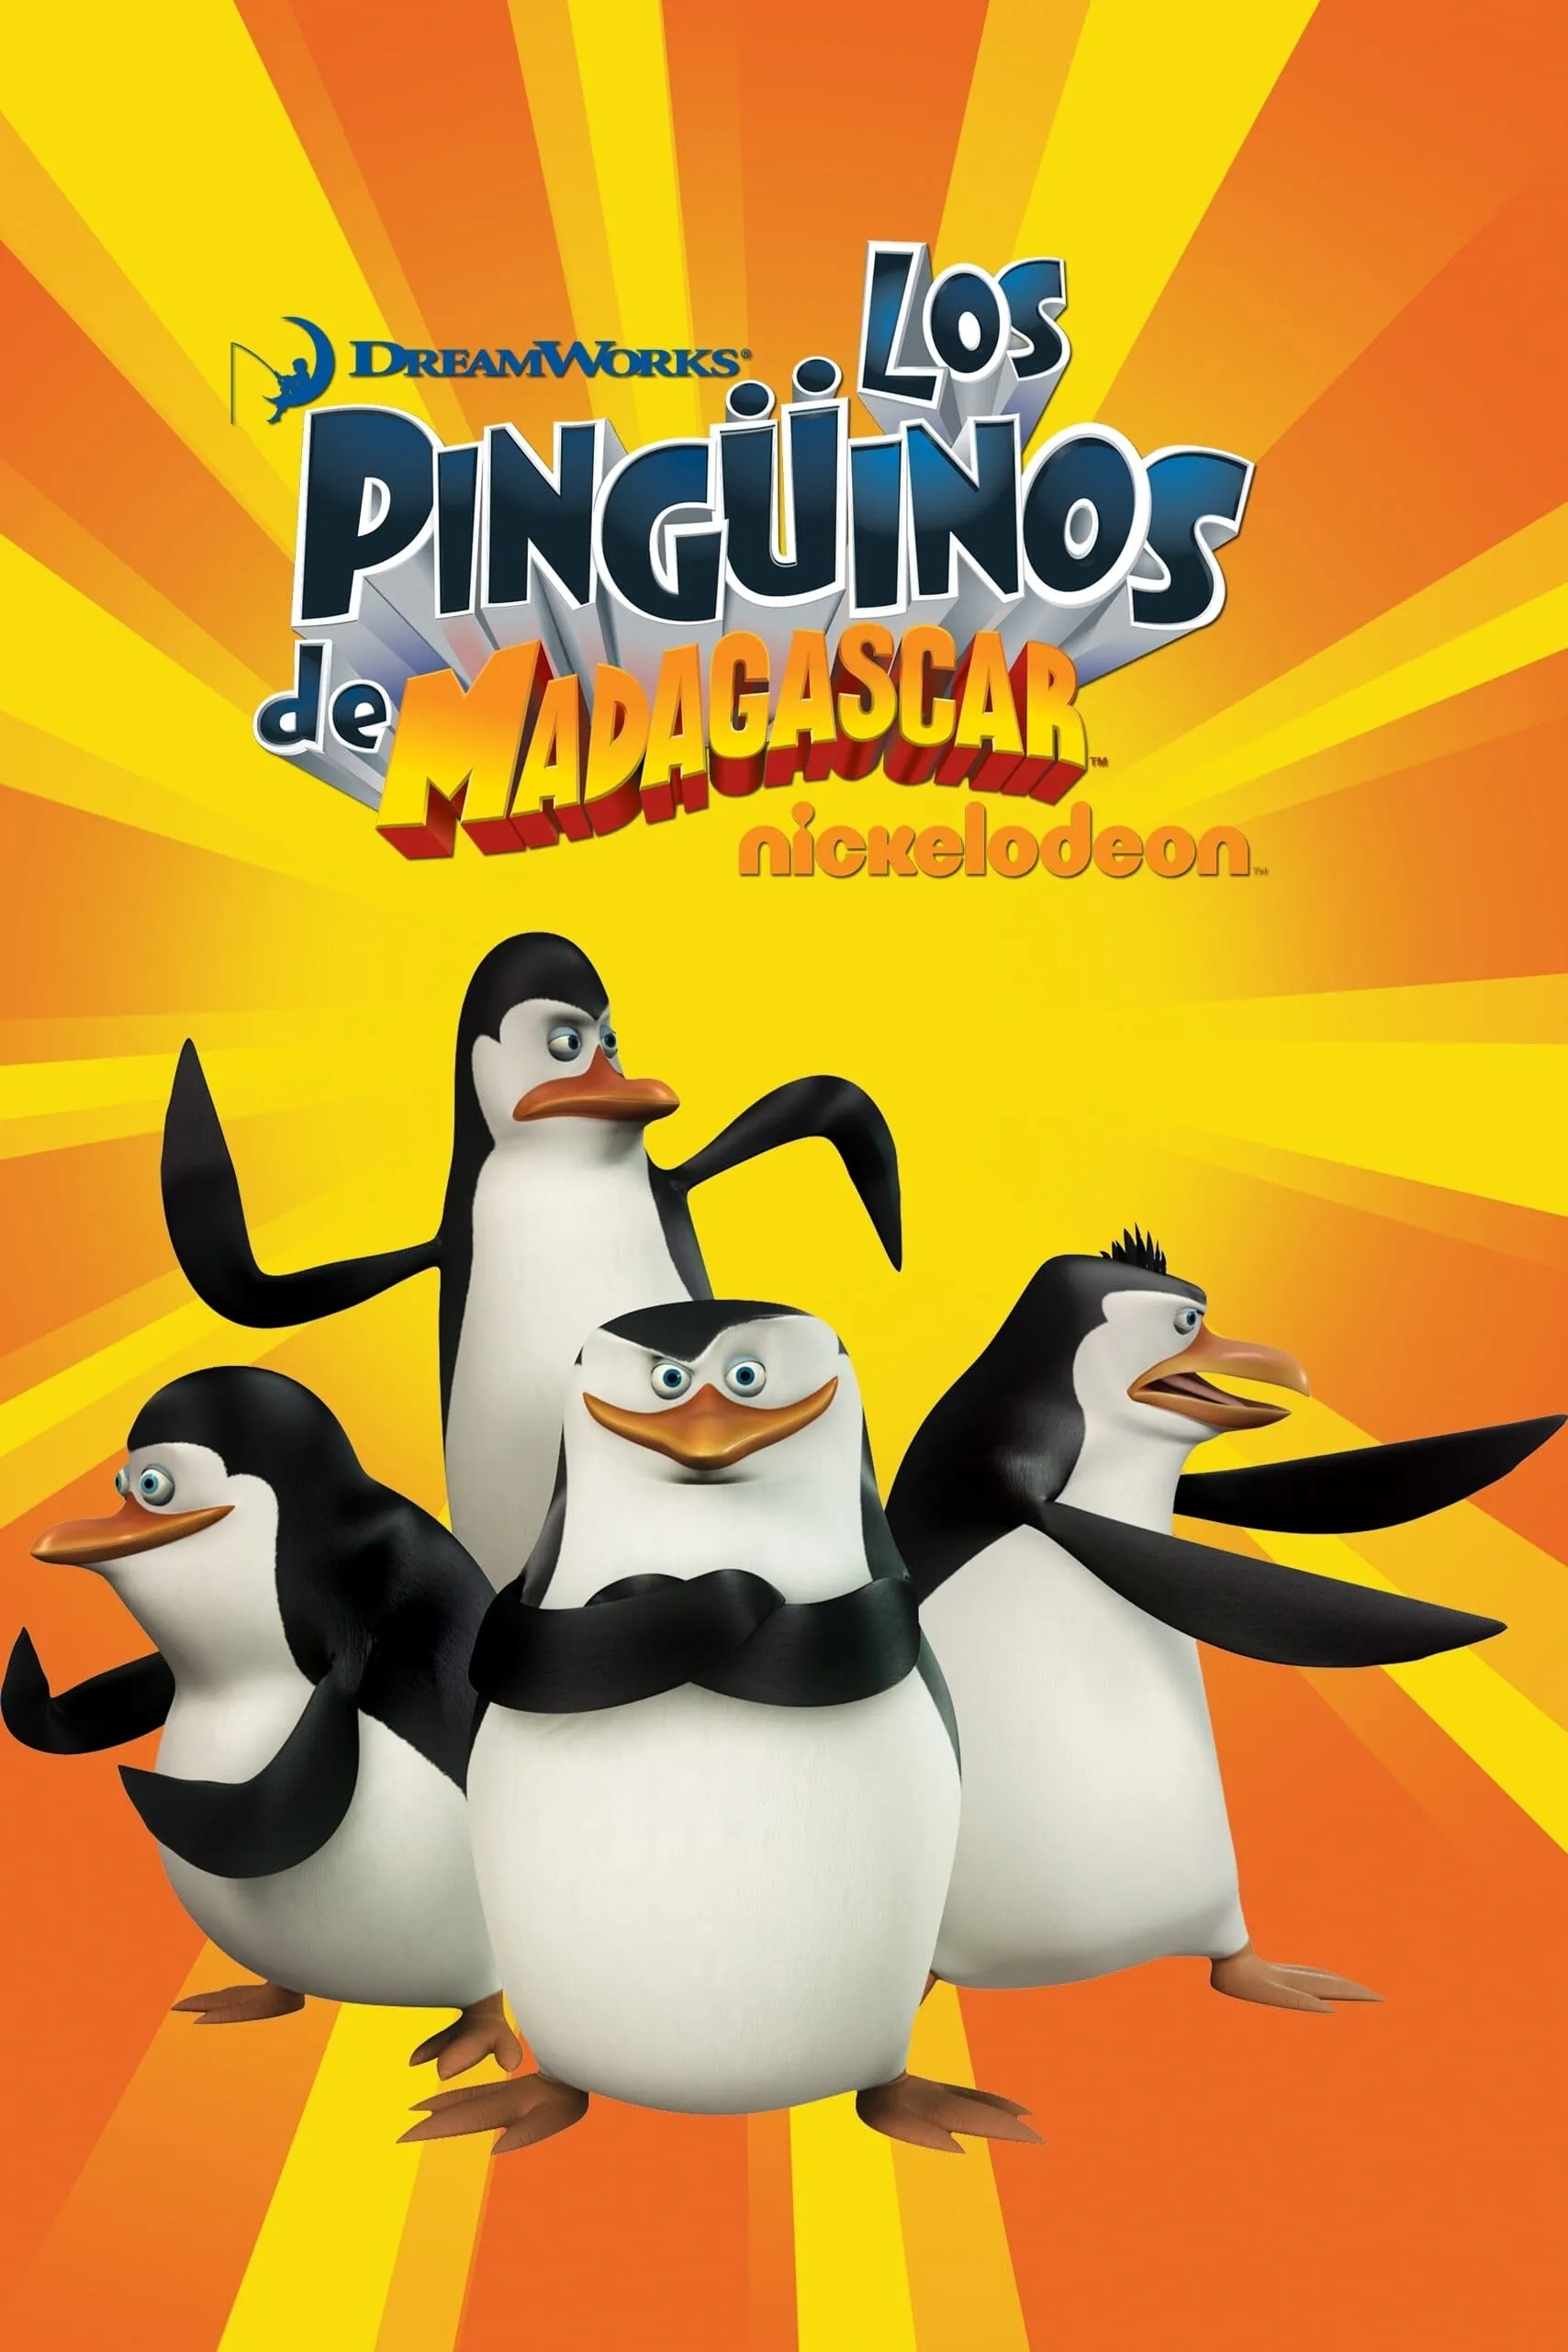 Los pingüinos de Madagascar - Doblaje Wiki